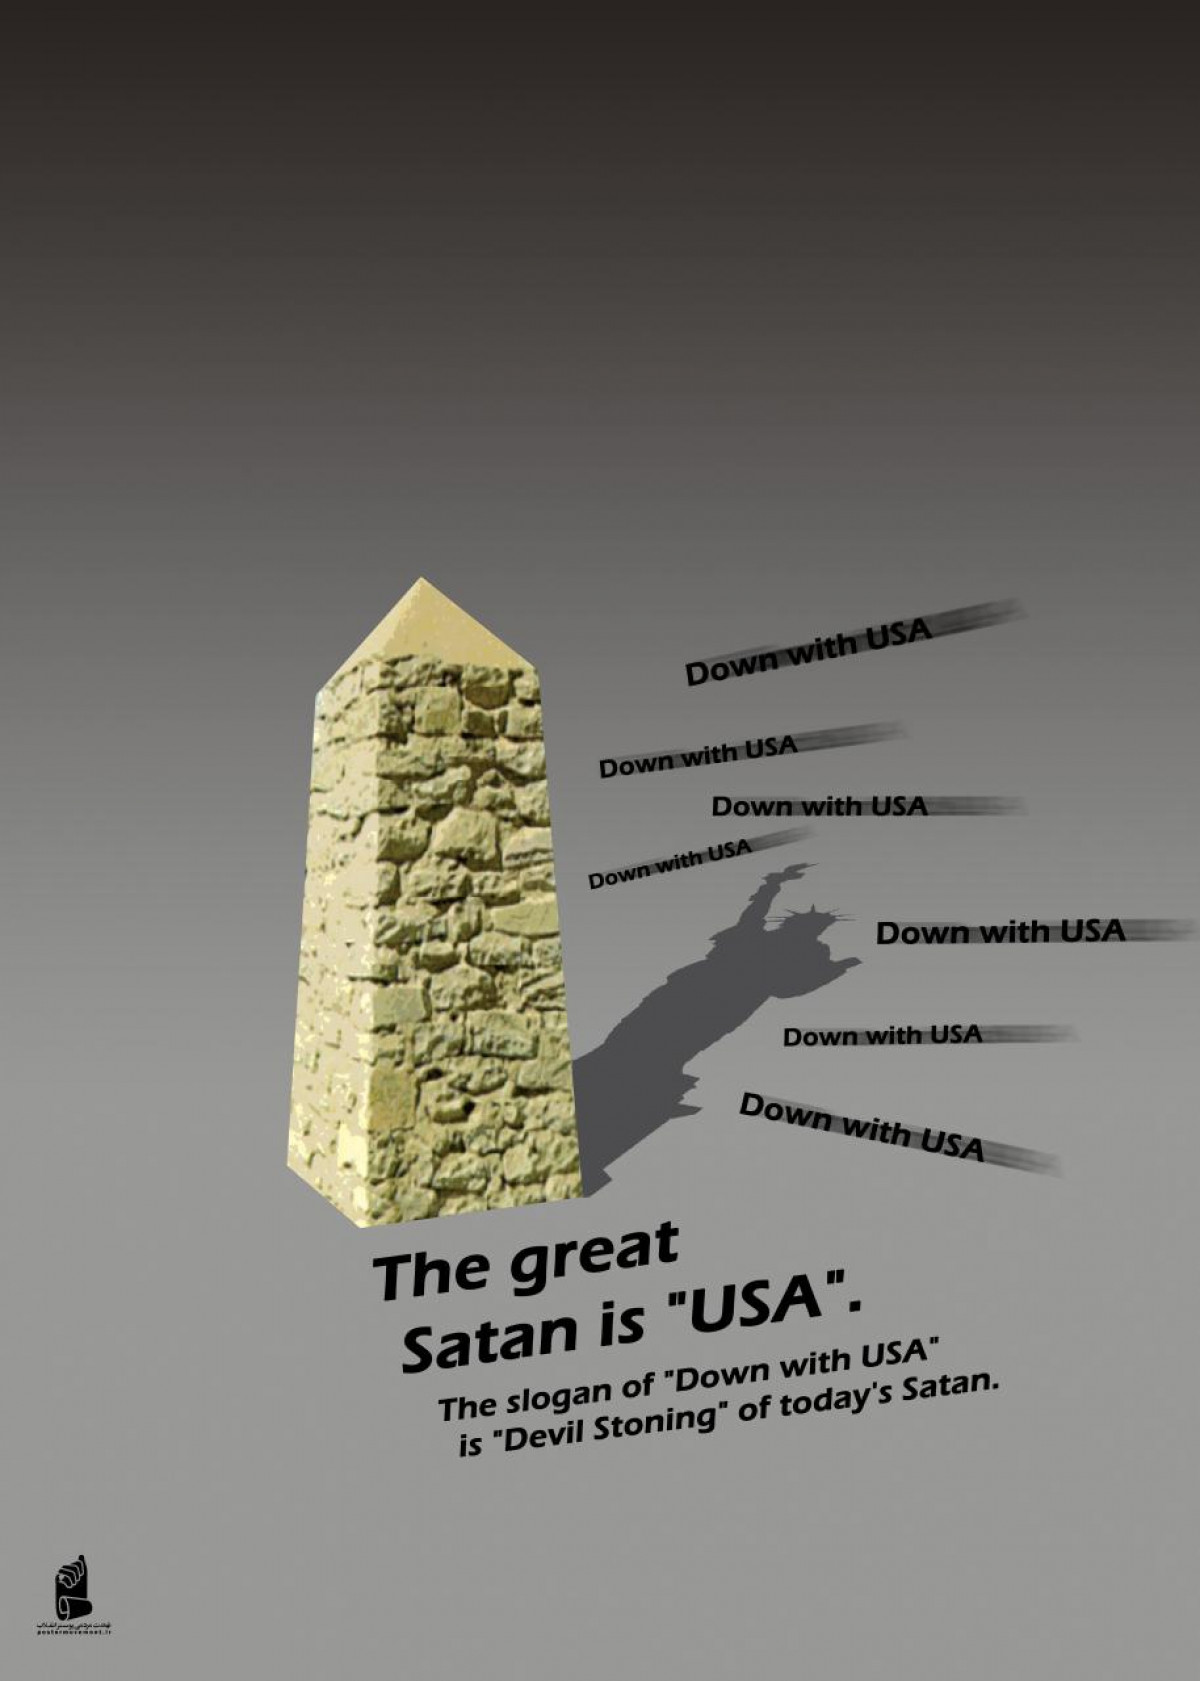 The great Satan is "USA"